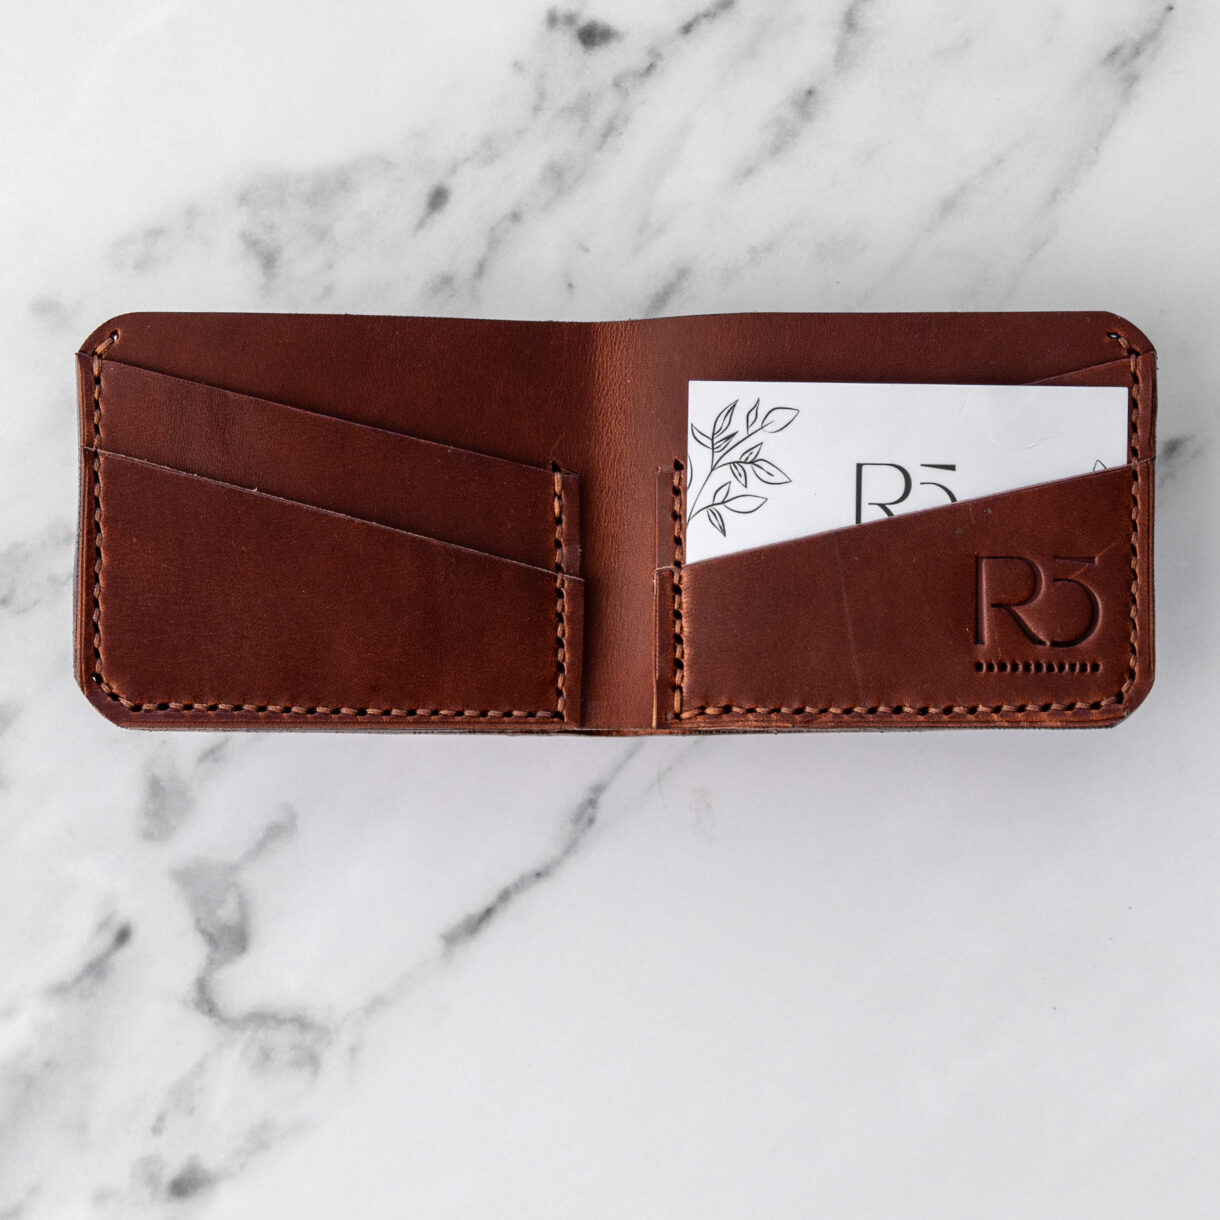 R5 Leather bags regalo wallet 23 sept 2023 028 scaled - Pelavida - Shop For Life